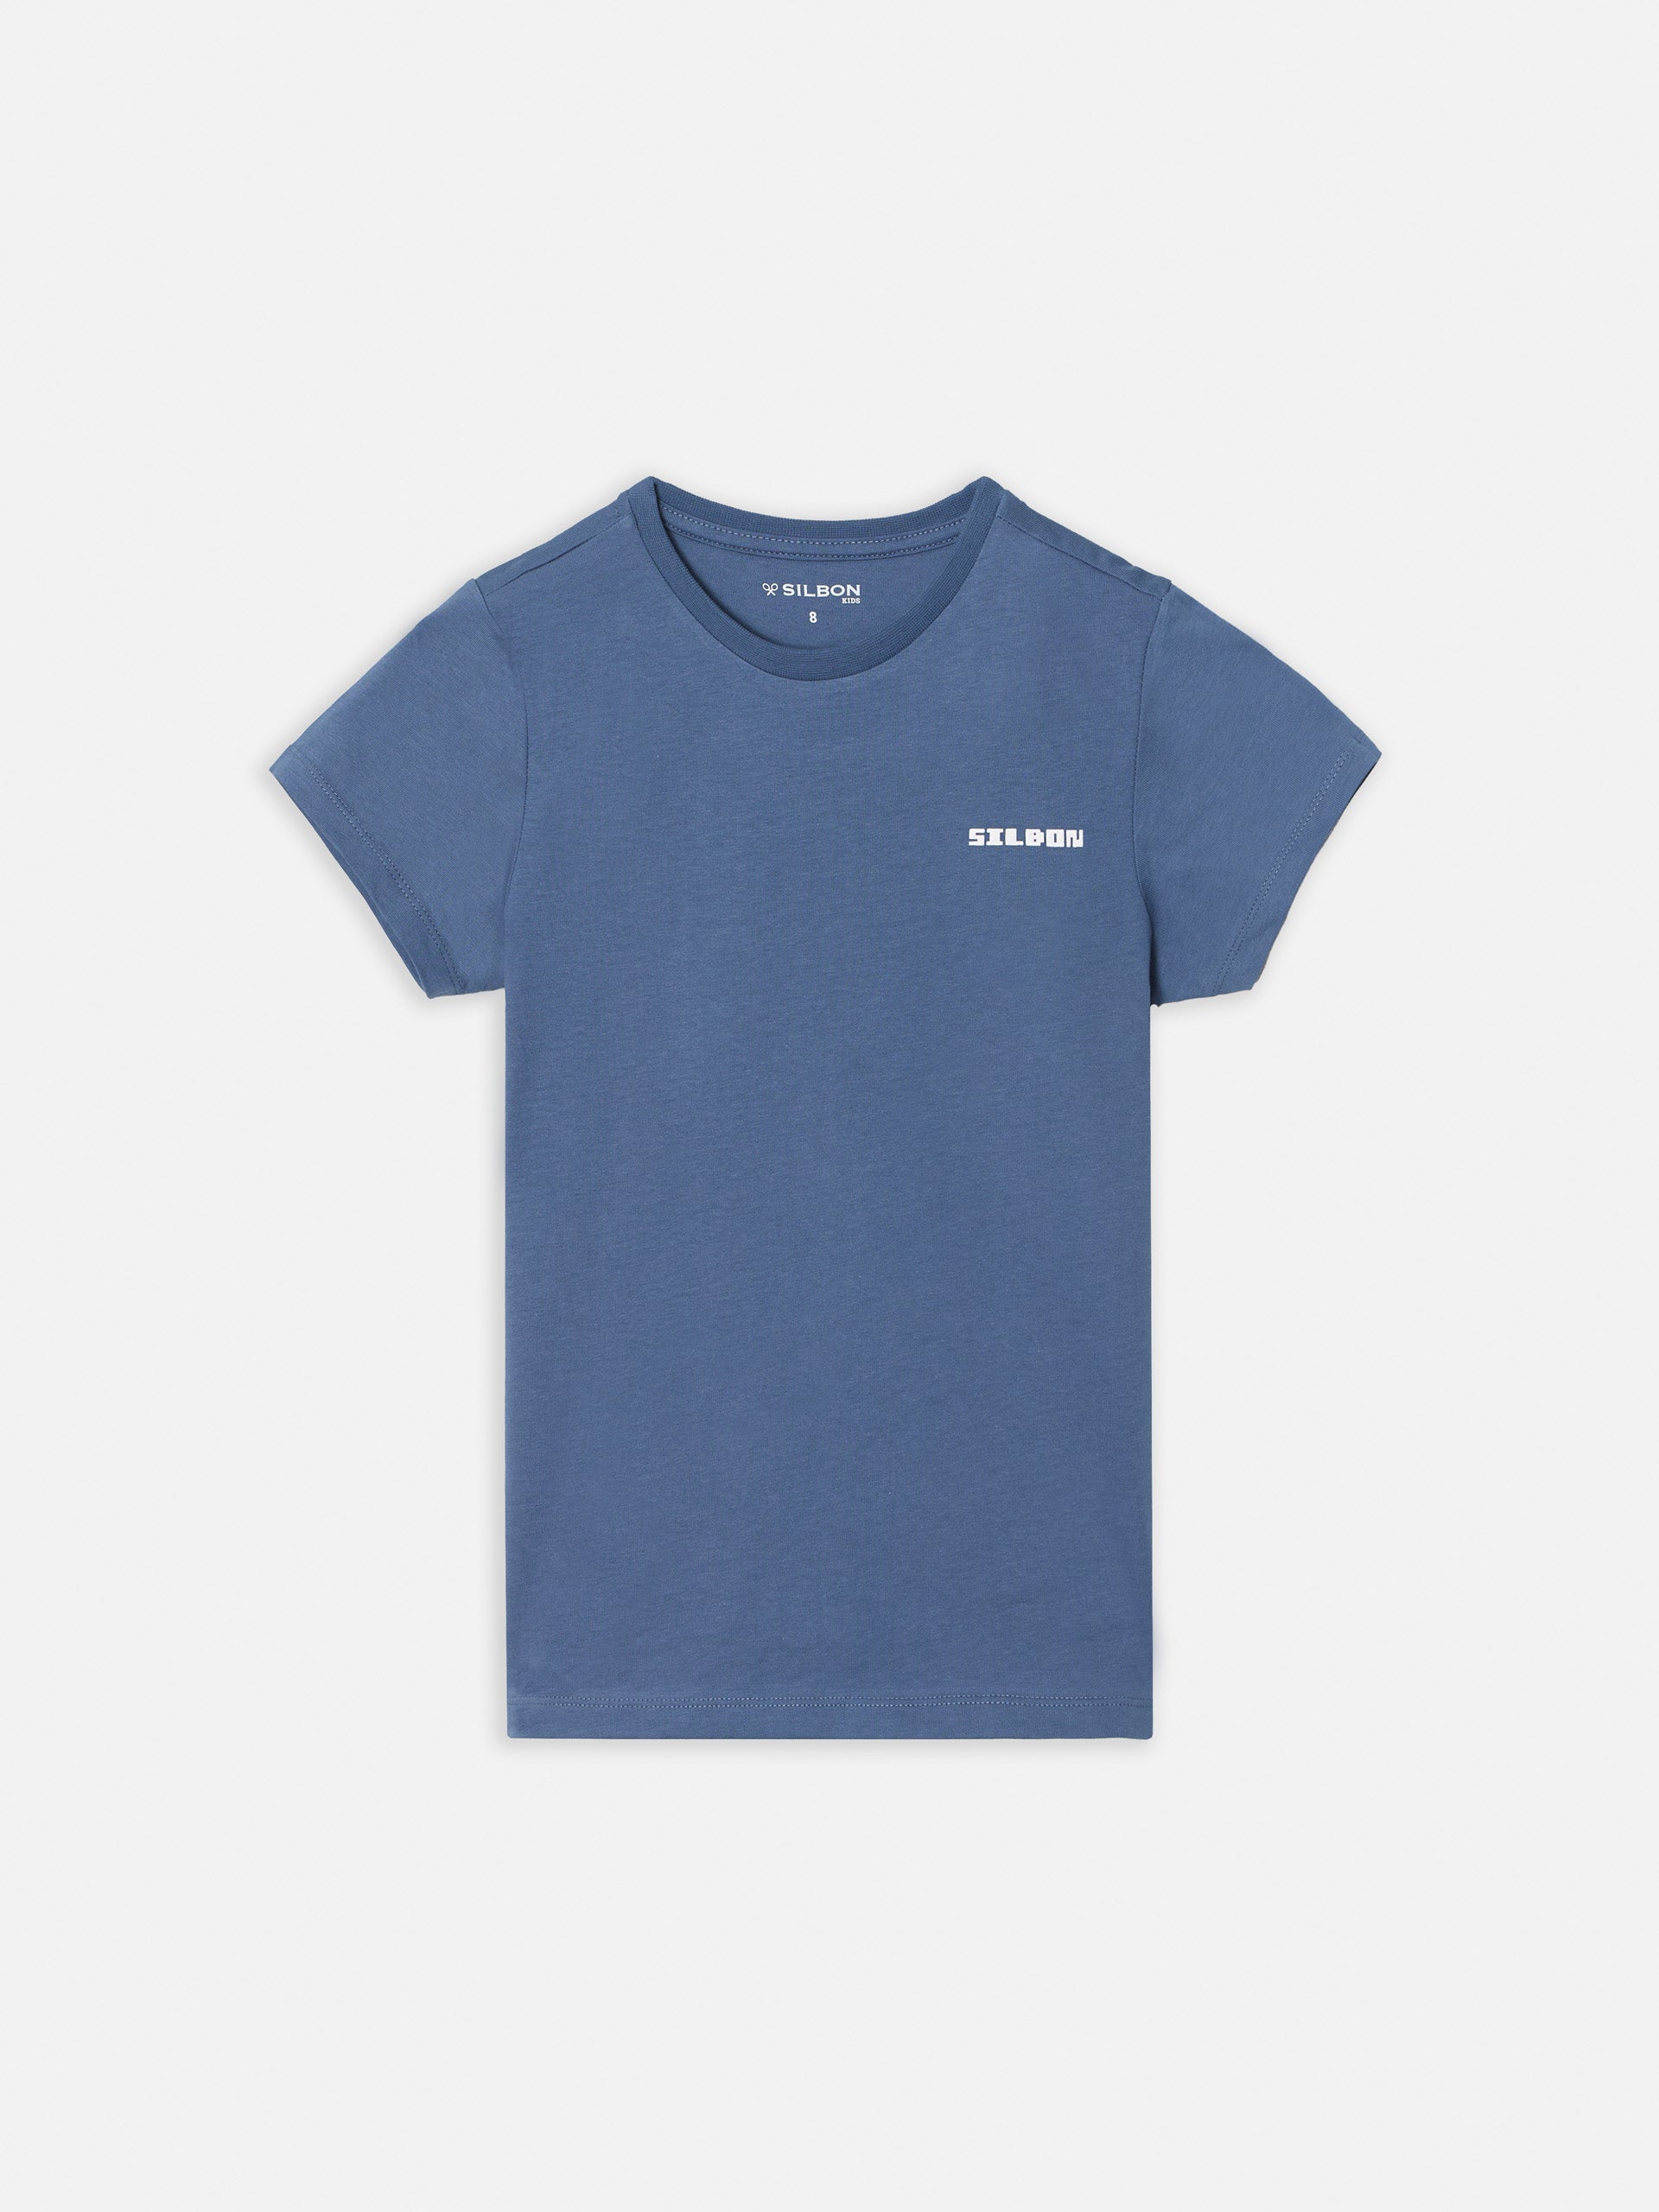 Camiseta kids space invaders azul